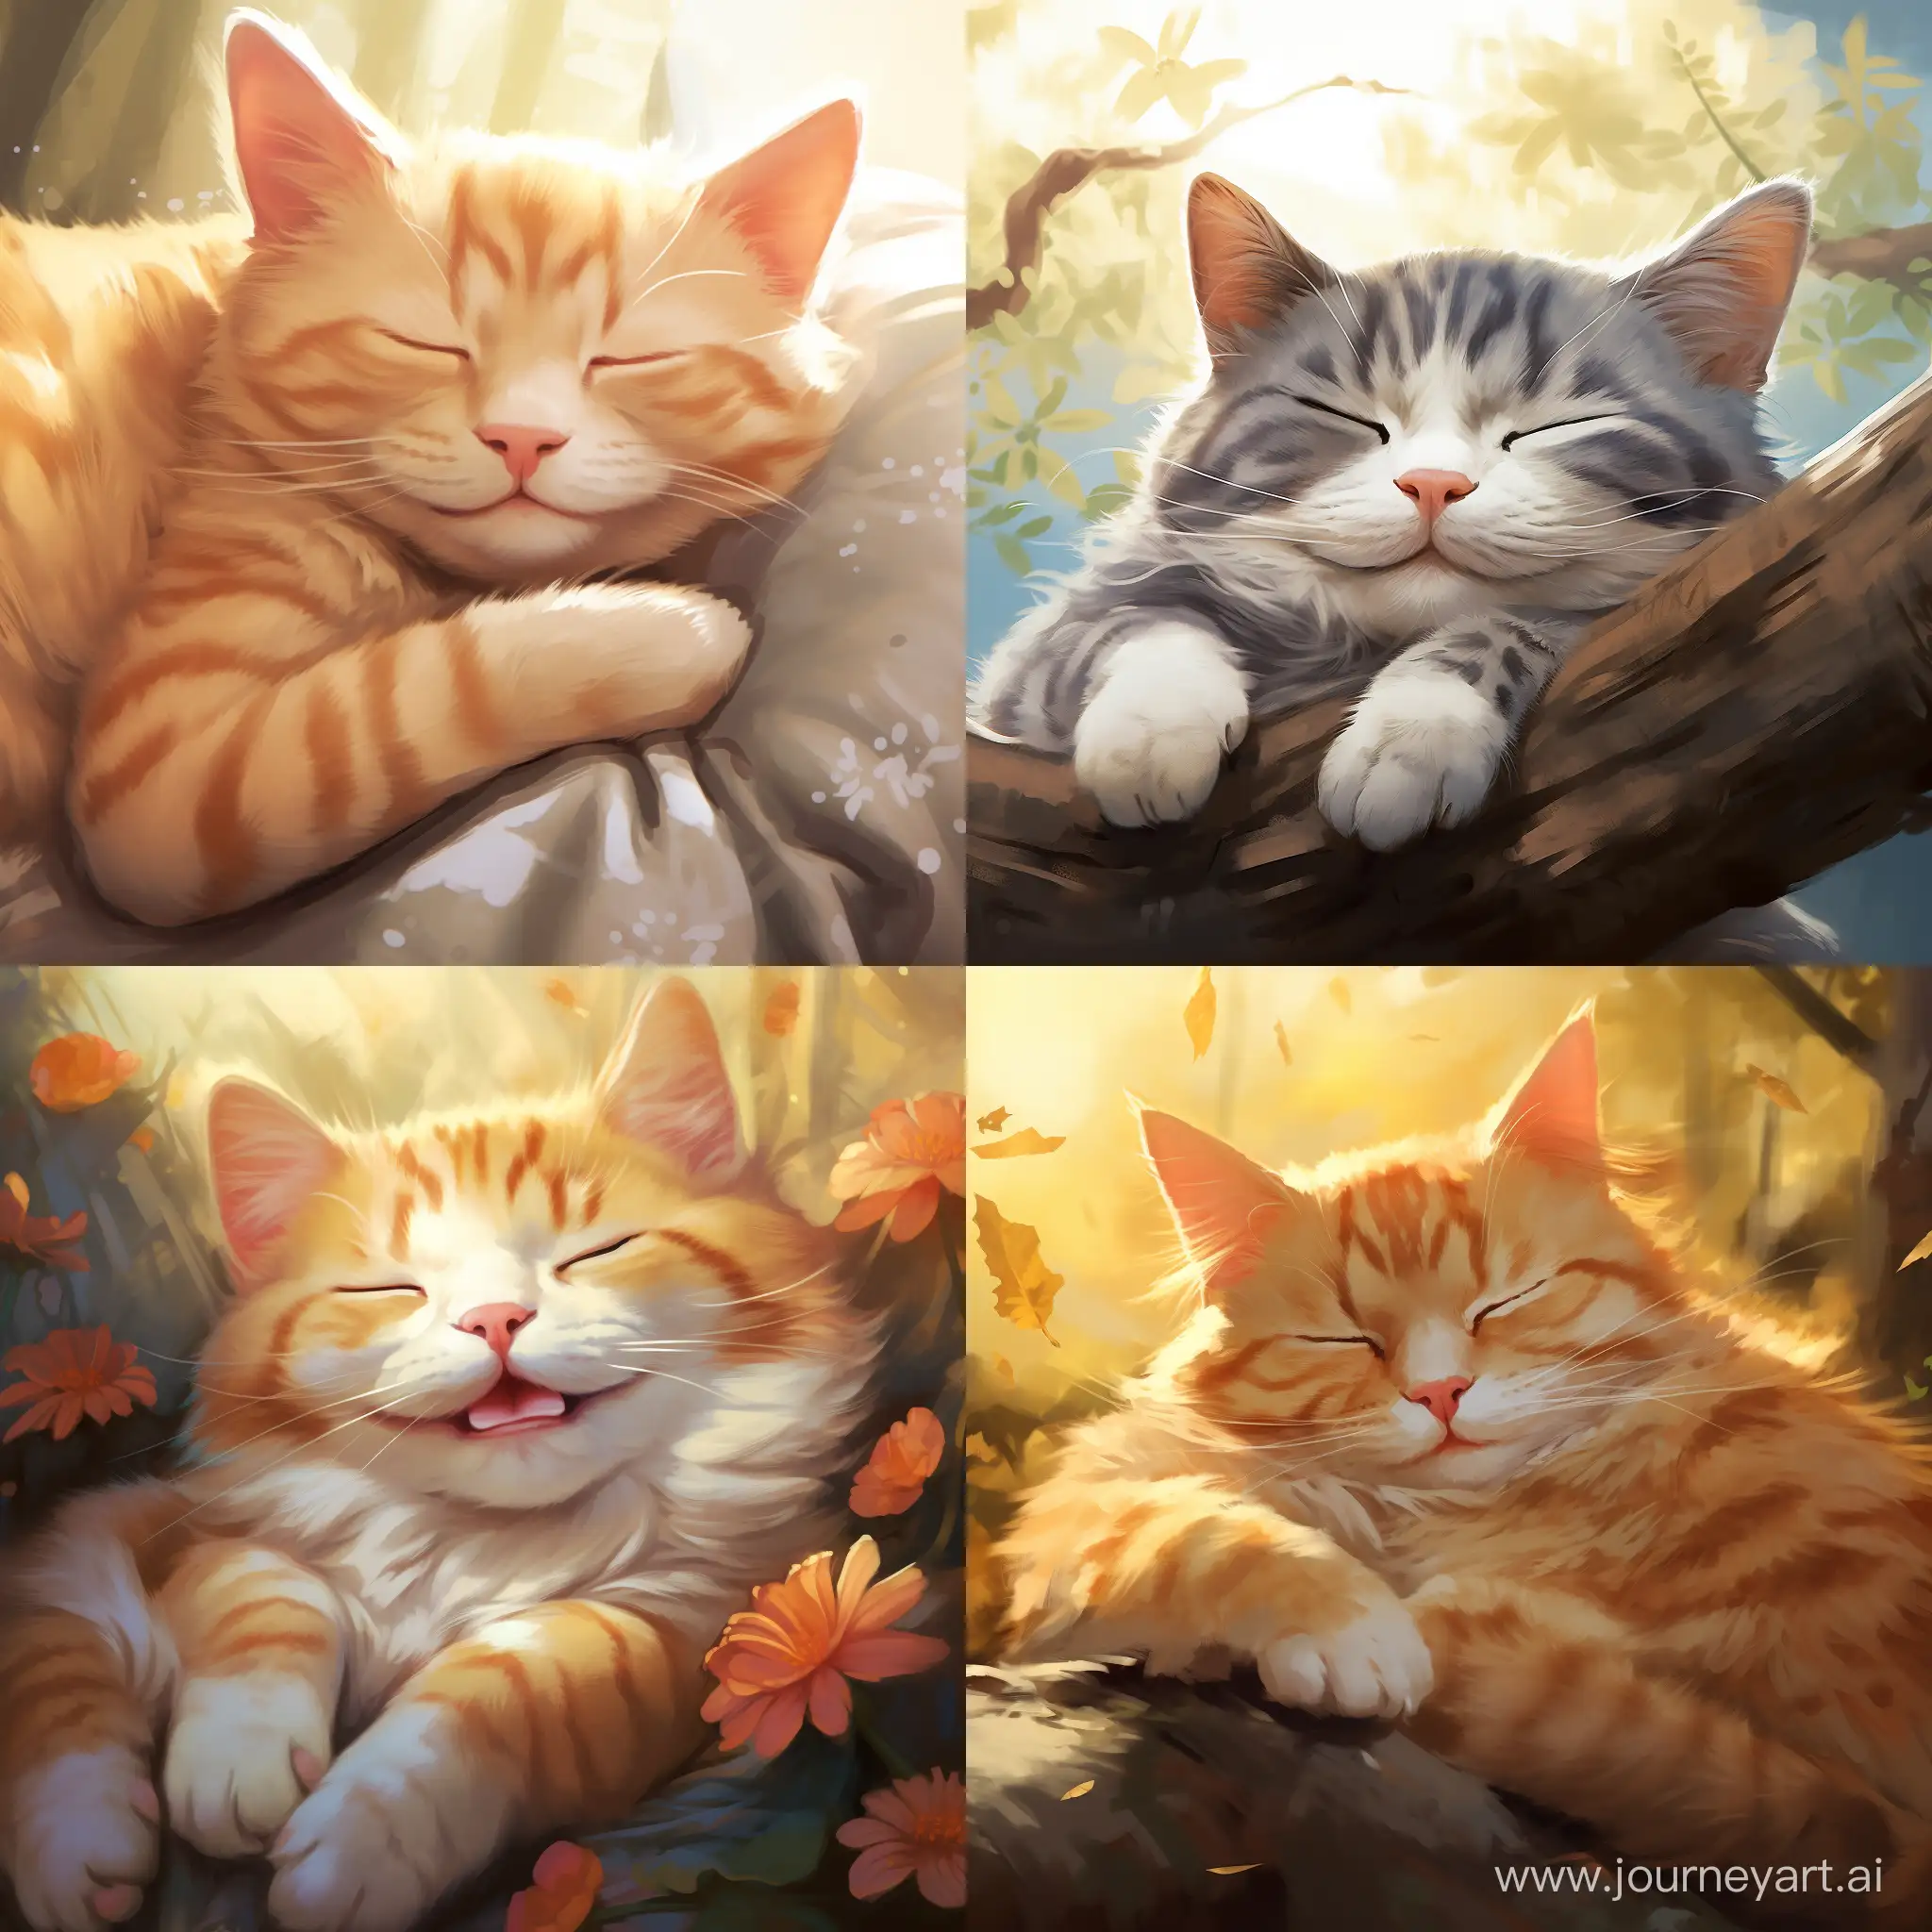 Contented-Cat-Enjoying-a-Peaceful-Nap